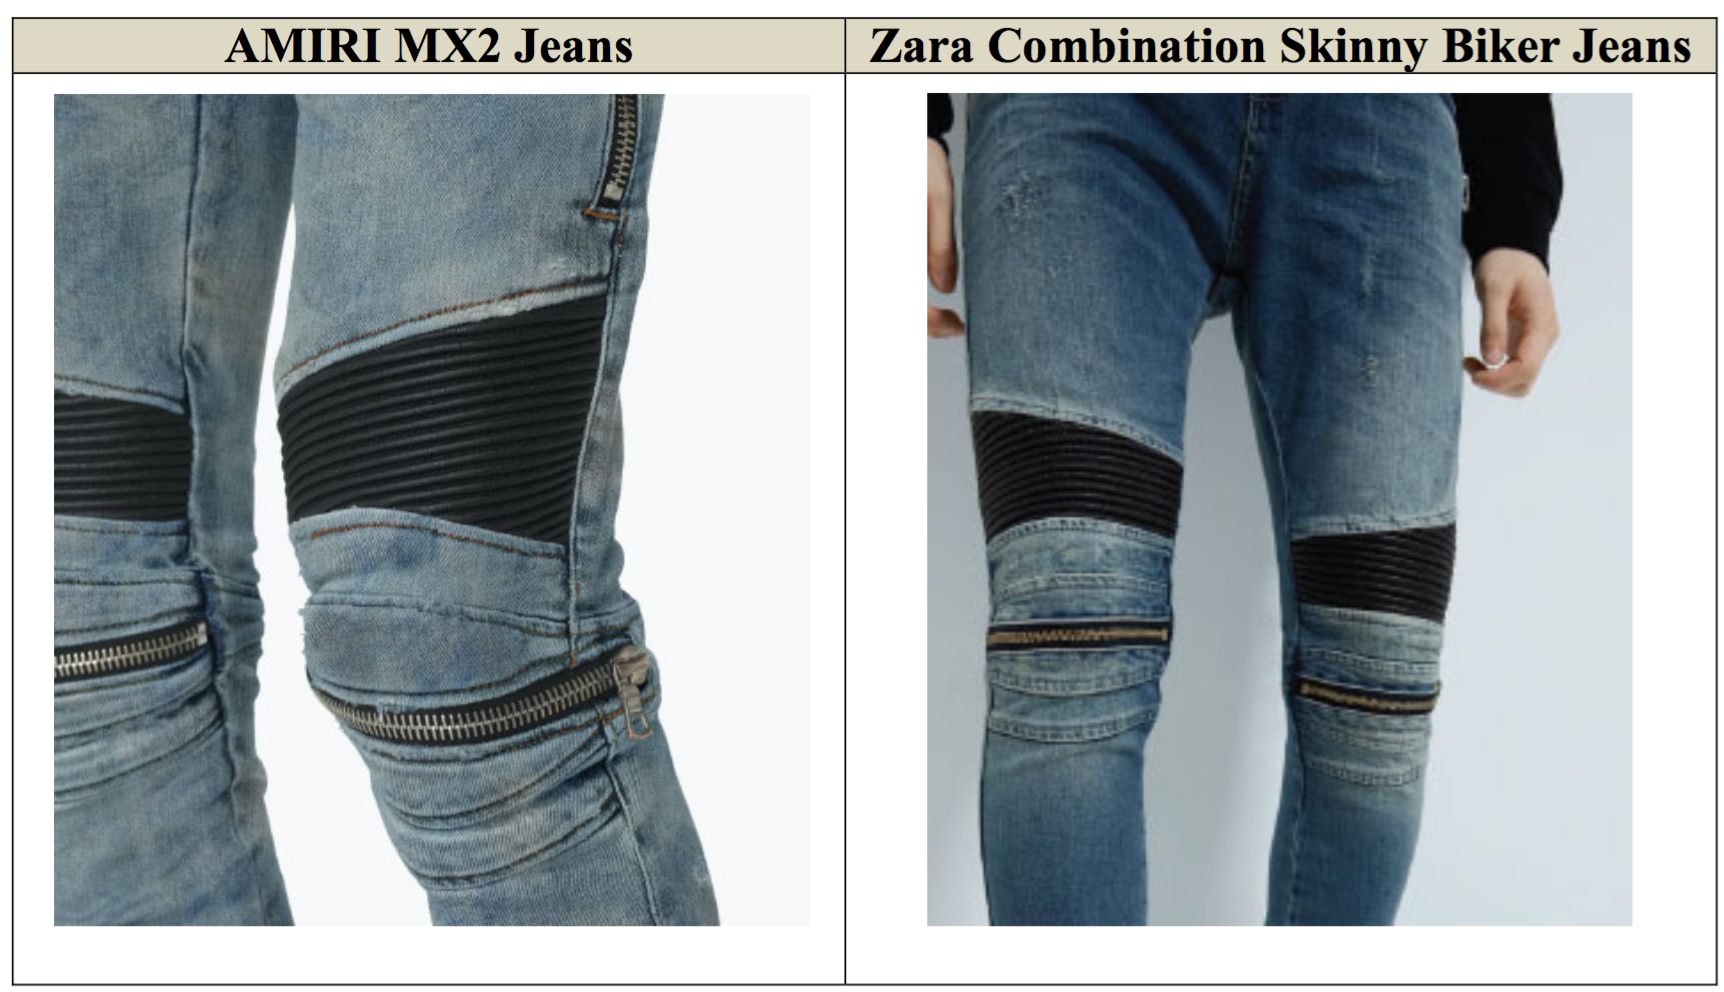 most expensive balmain jeans